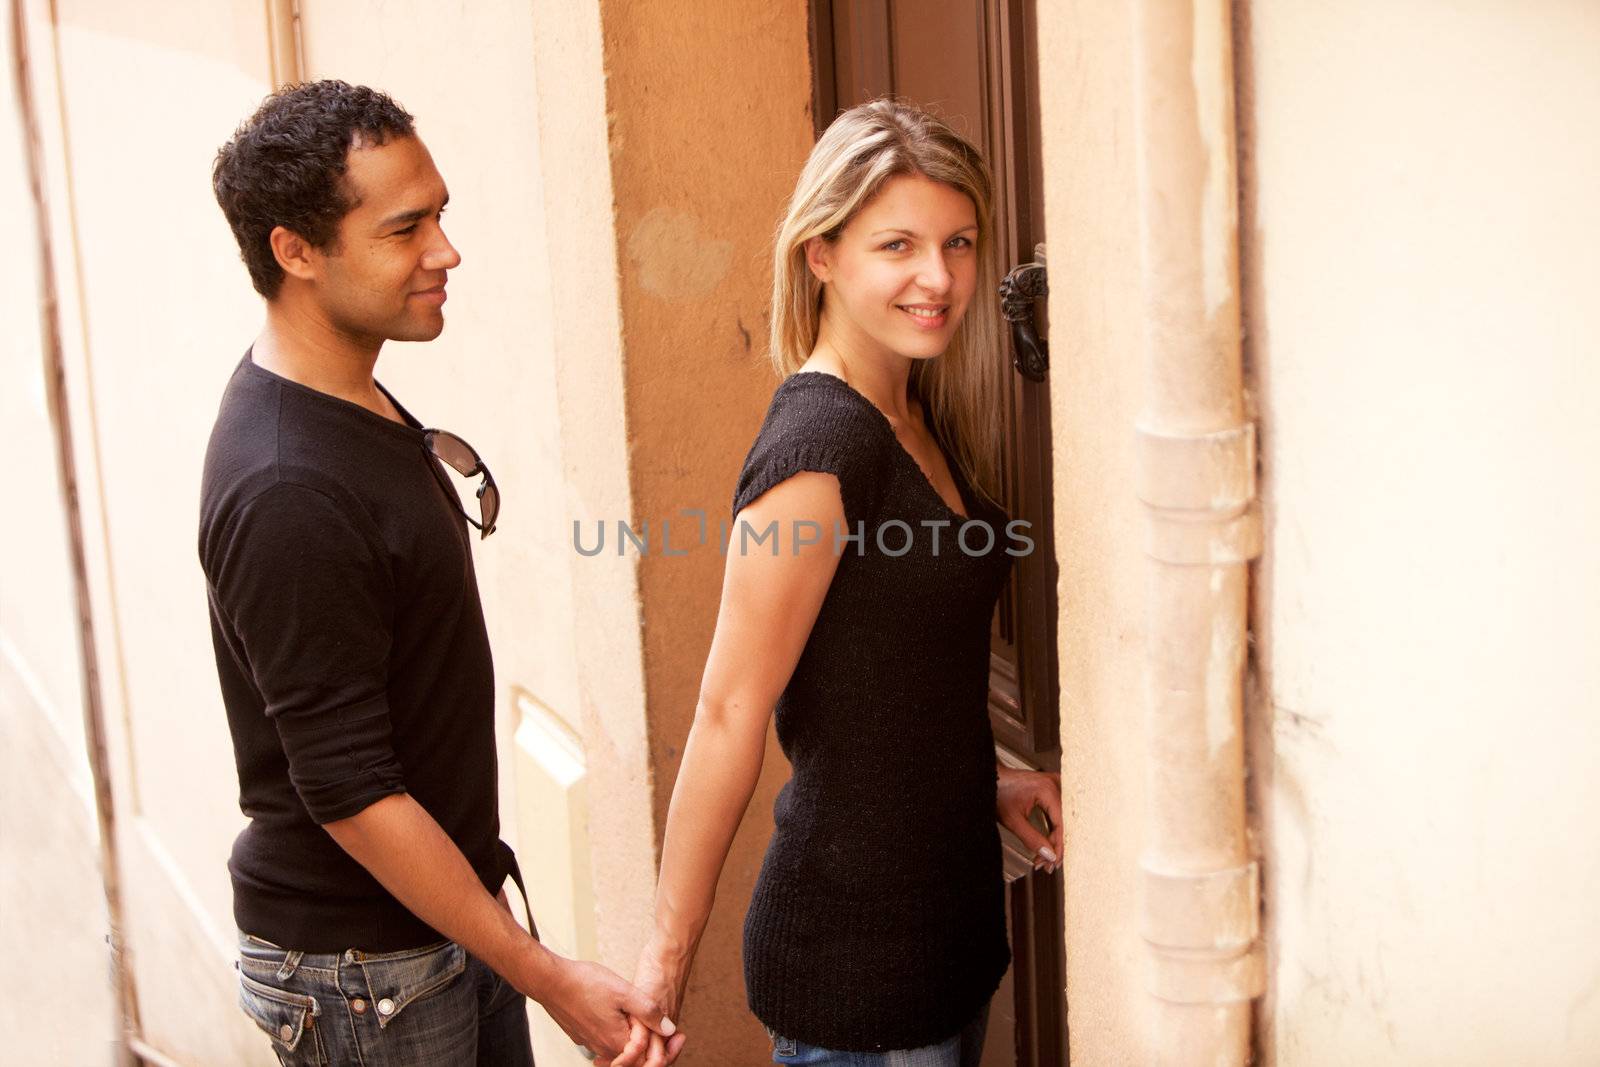 A happy couple in an outdoor European quaint street